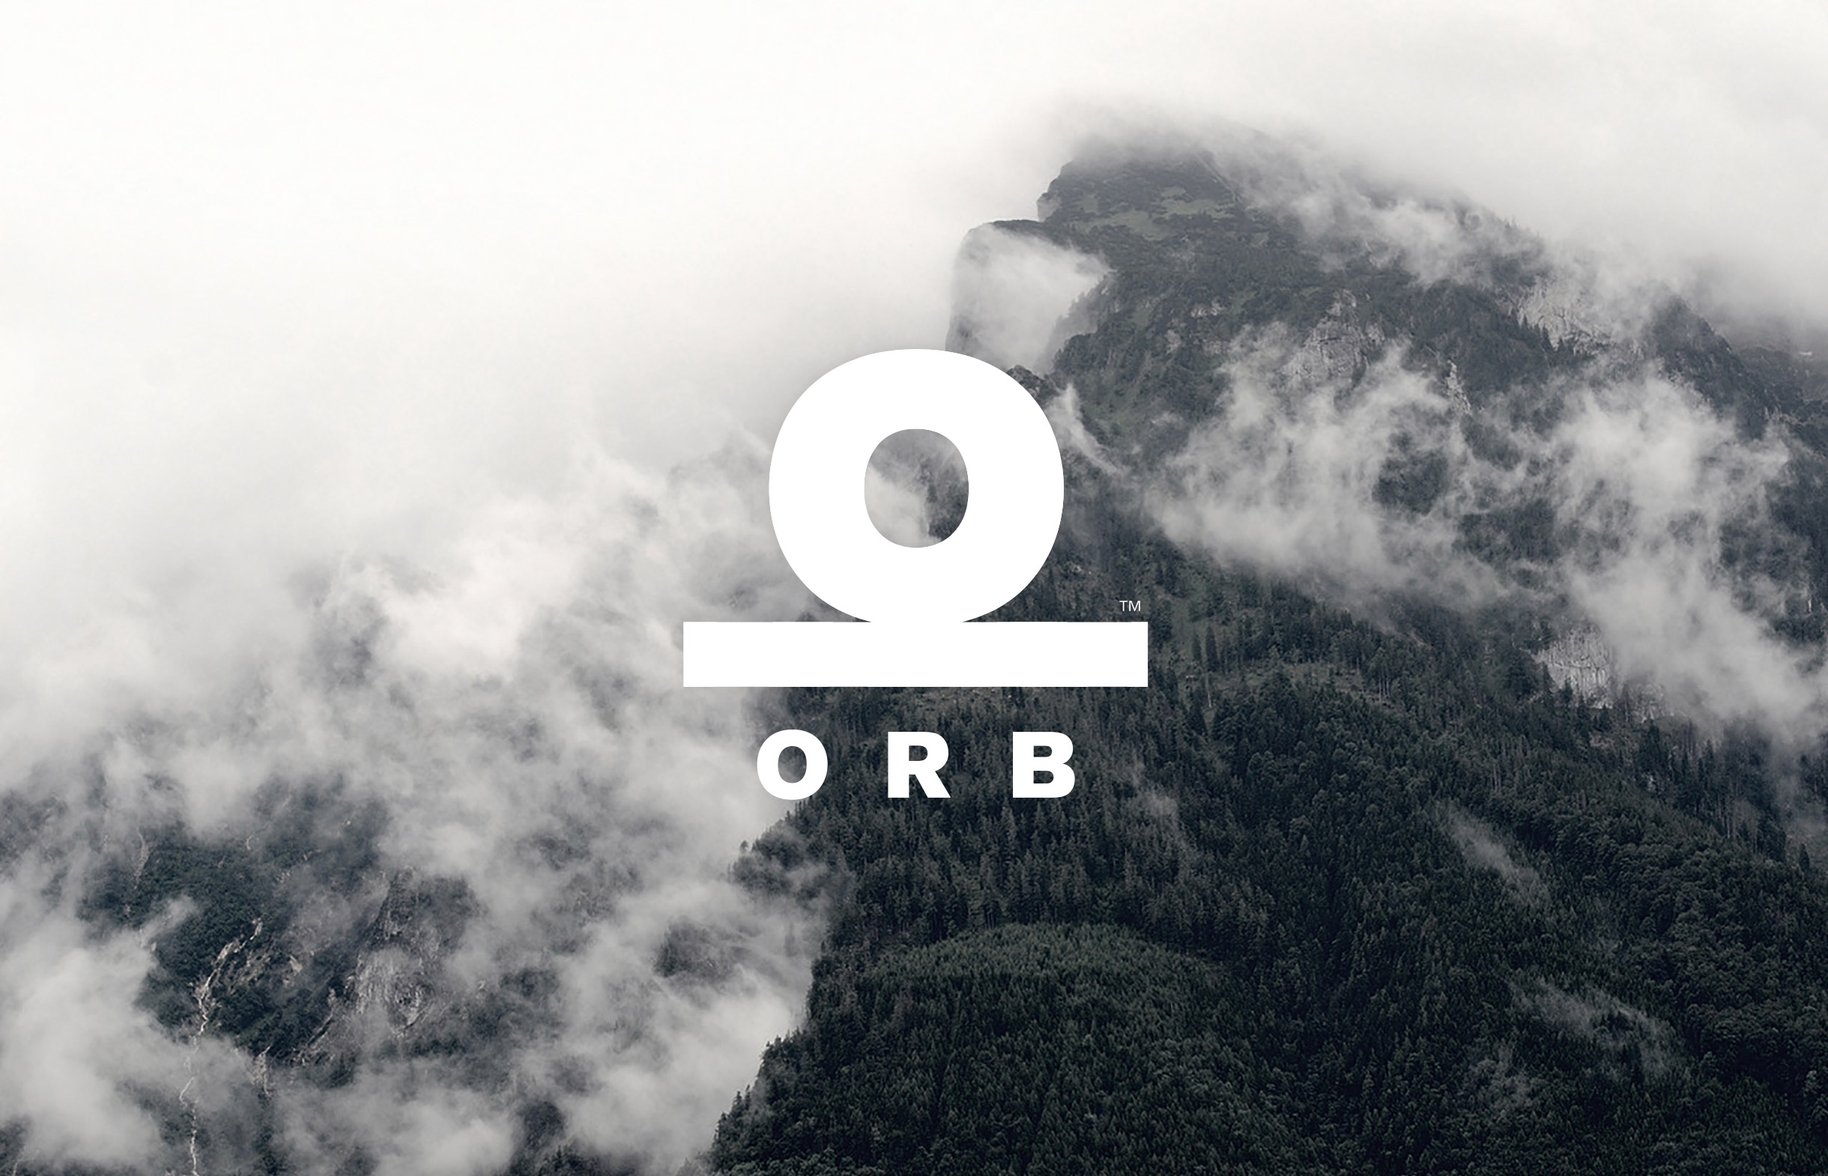 Orb logo overlay on mountain photography